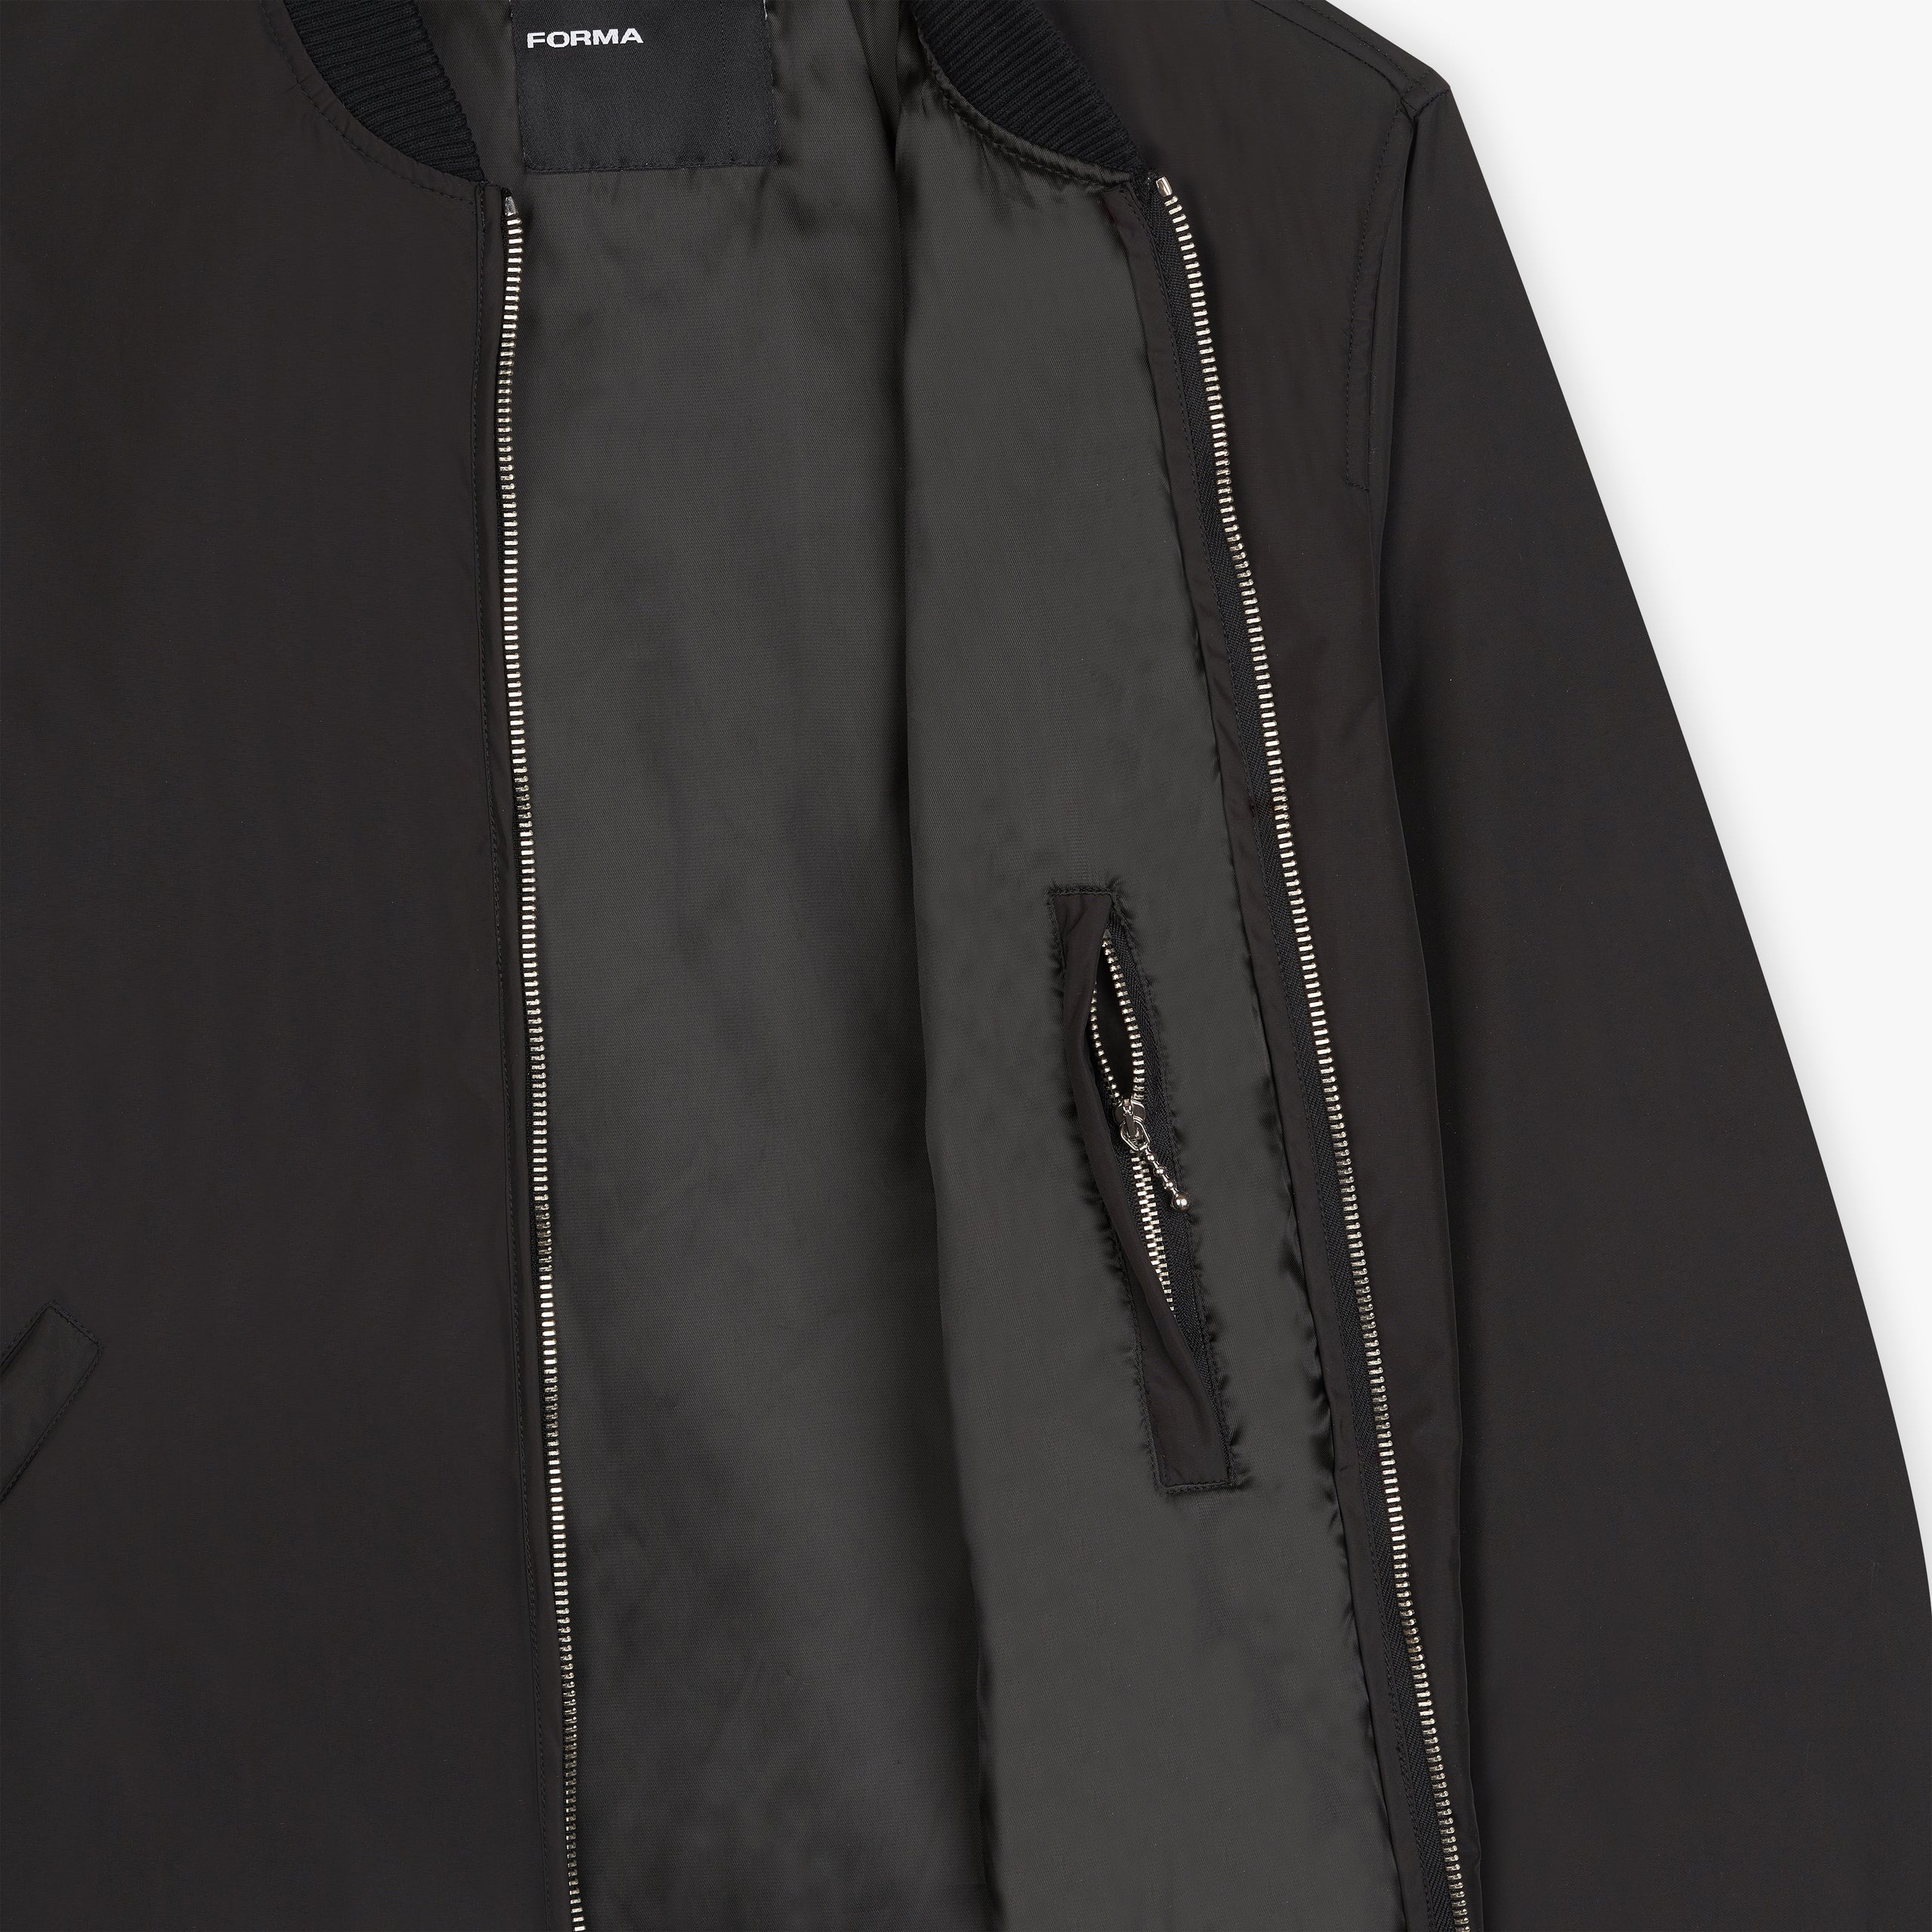 Forma bomber jacket black